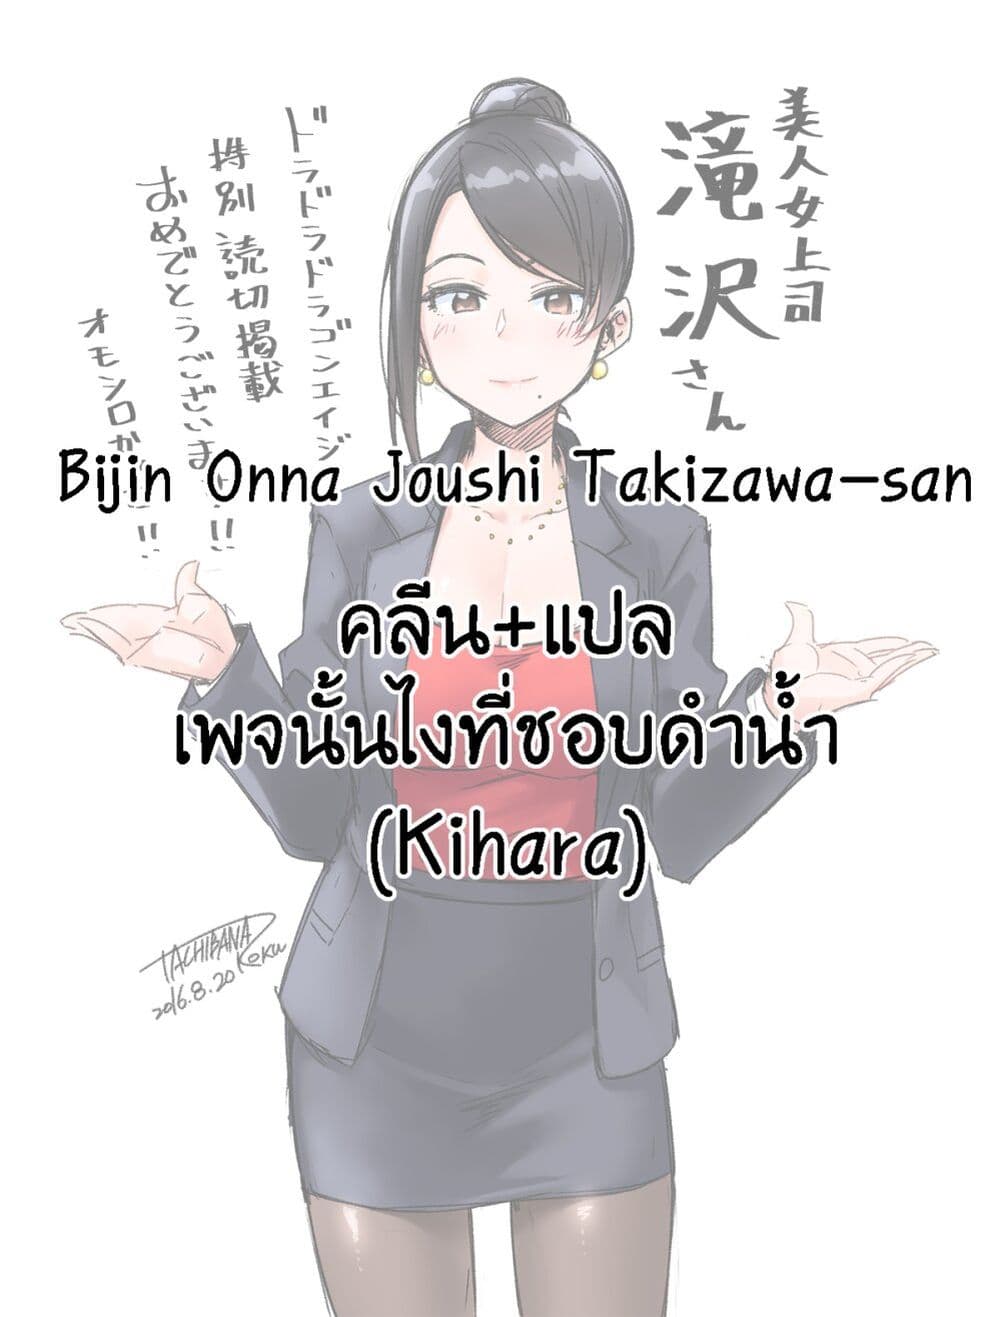 Bijin Onna Joushi Takizawa-san หัวหน้าสุดสวย ทากิซาวะซัง 20-20